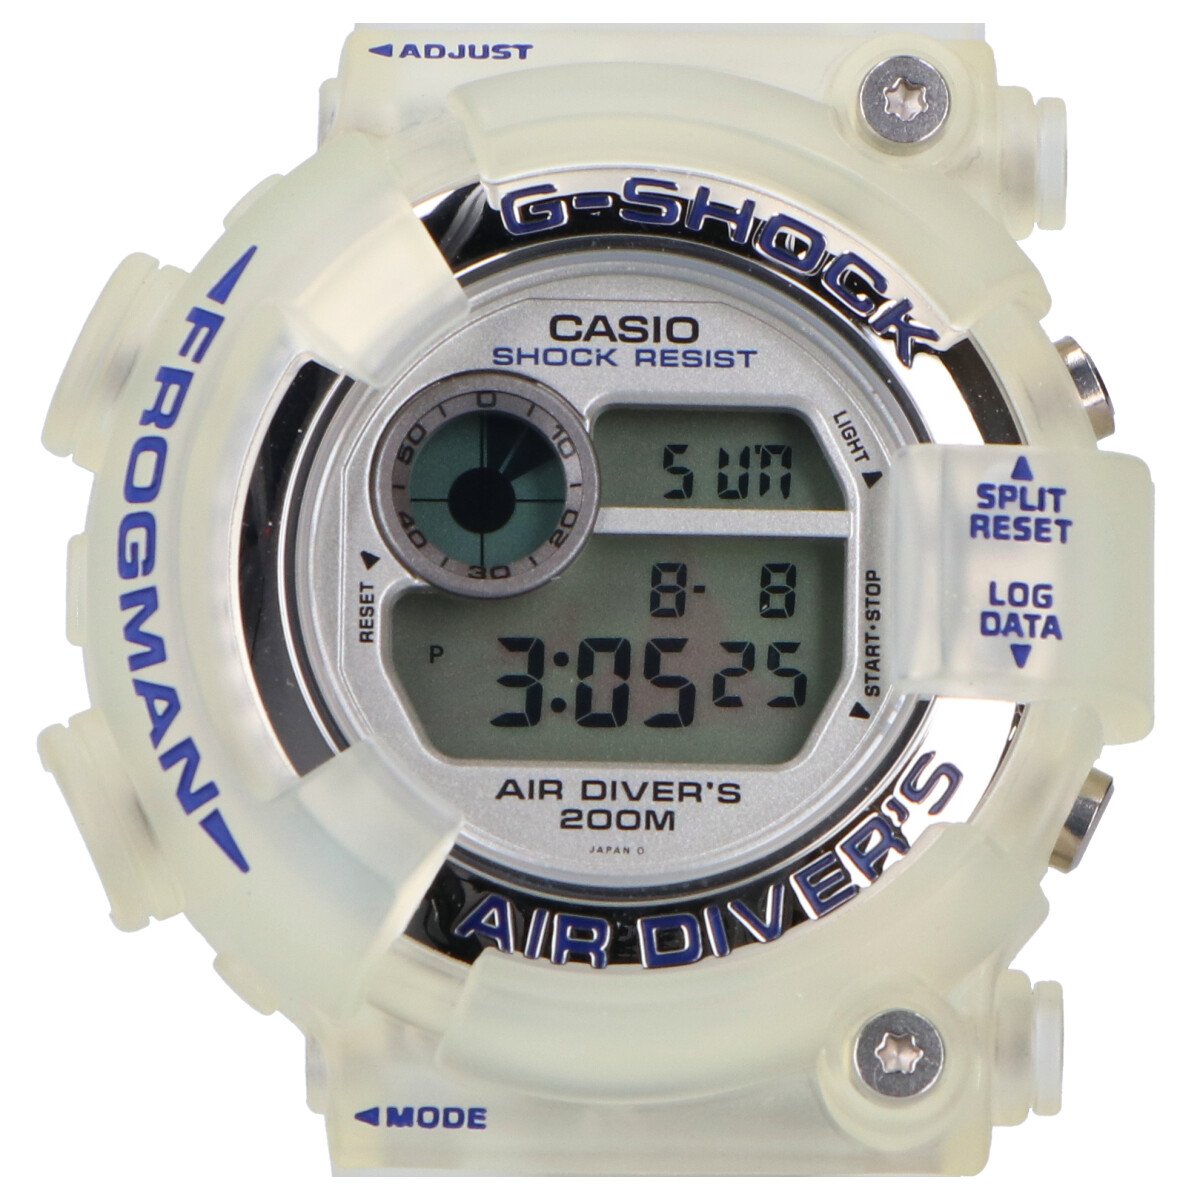 G-SHOCKのDW-8250WC-7BT フロッグマン W.C.C.S.世界サンゴ礁保護協会オフィシャルモデル デジタル時計の買取実績です。